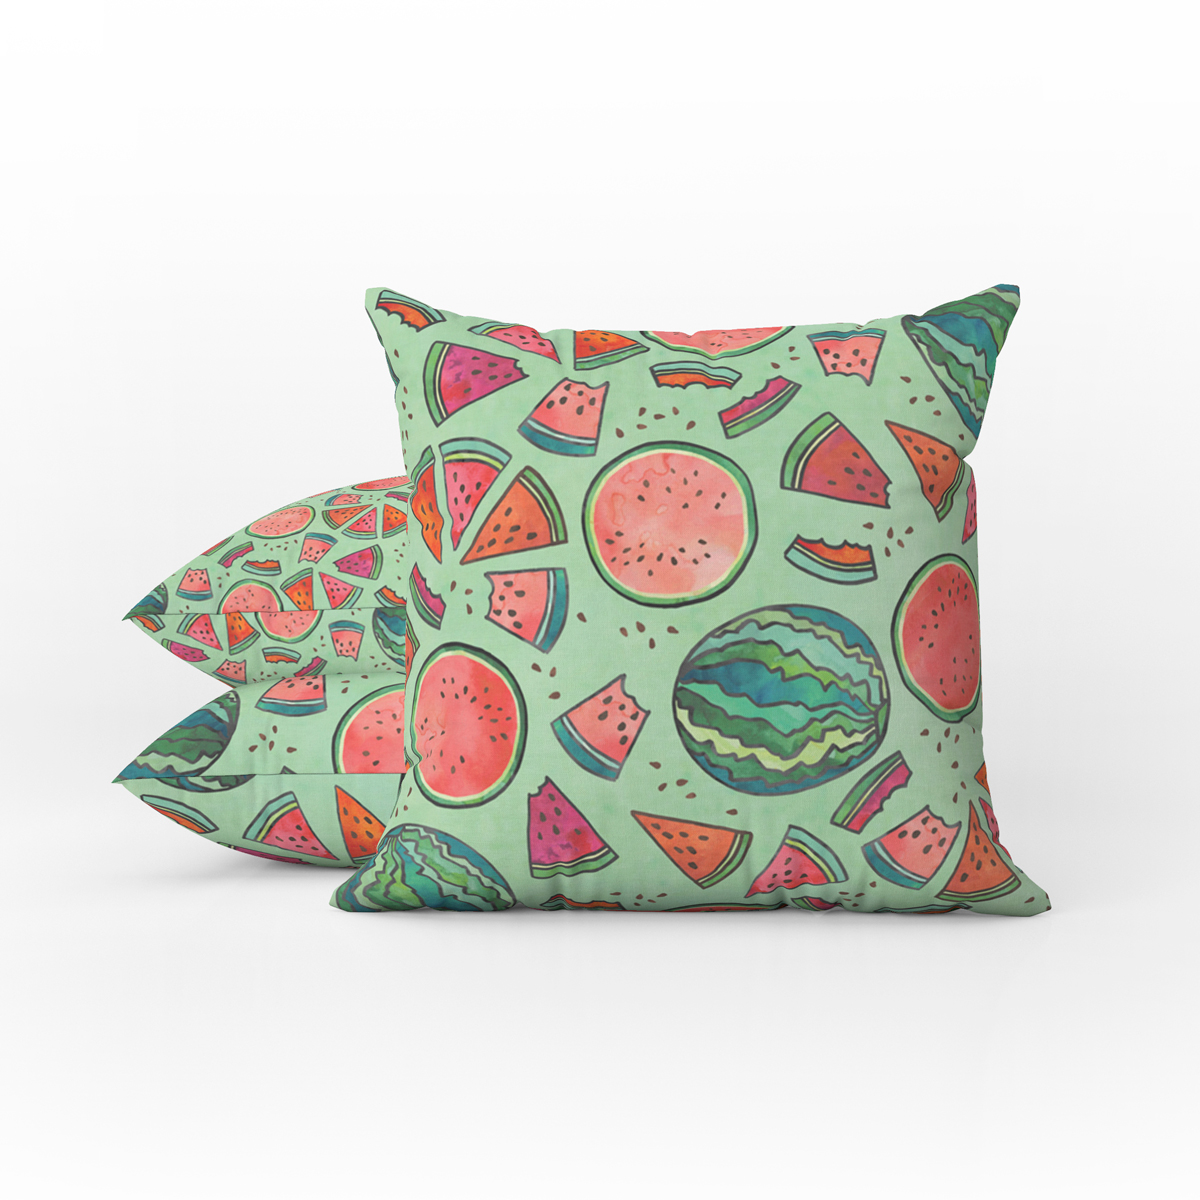 Melon surface pattern design on pillow fabrics